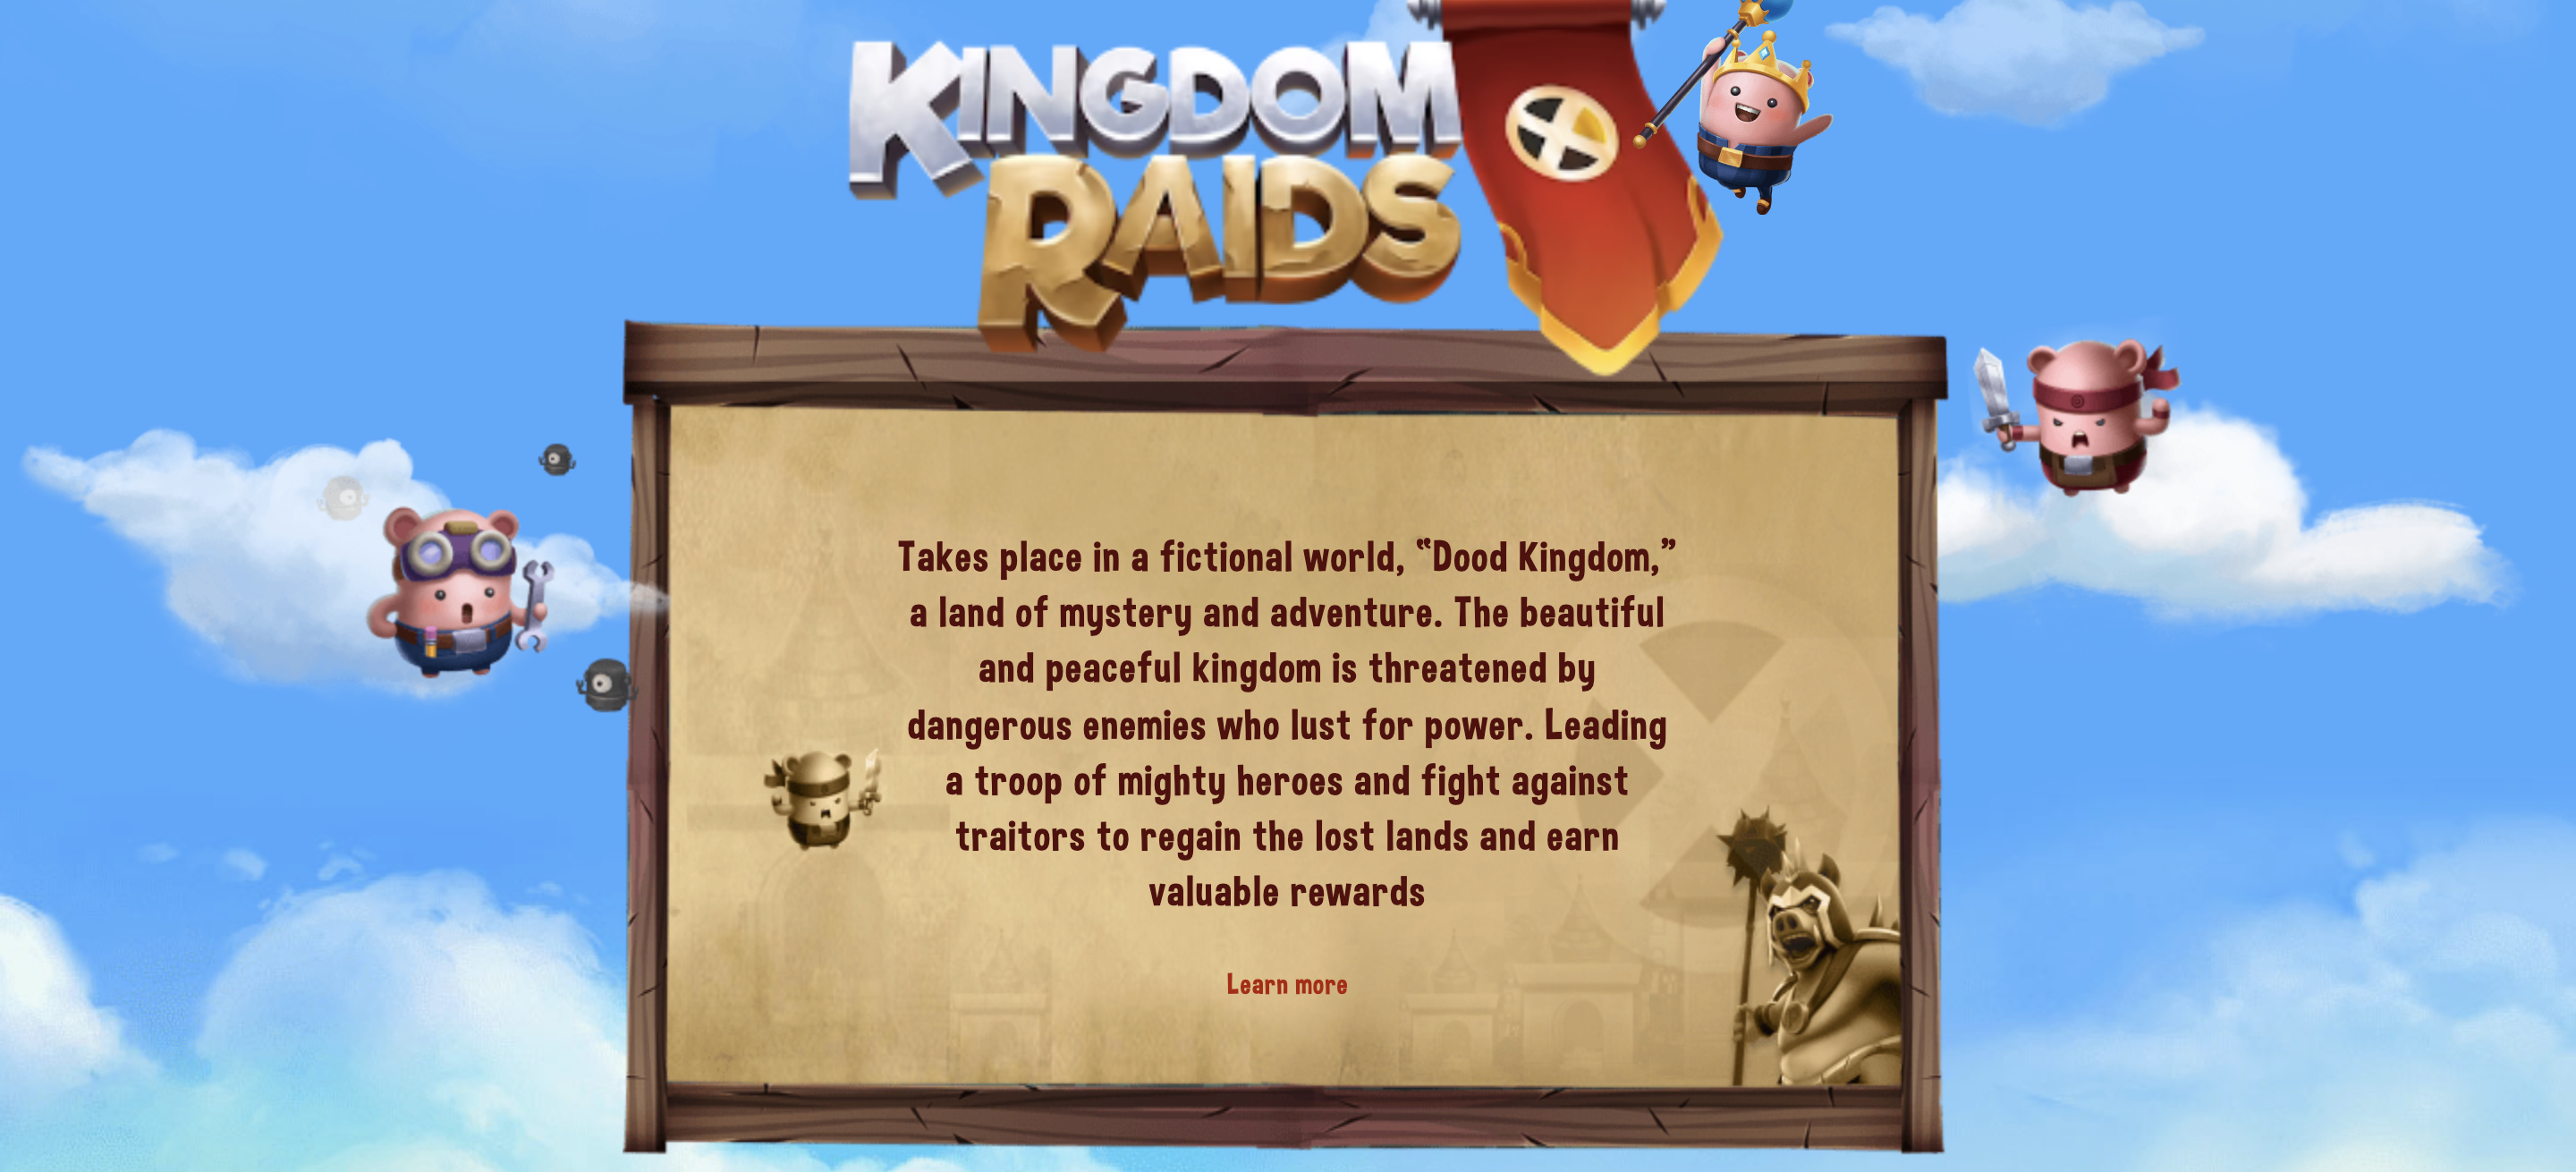 Kingdom Raids About